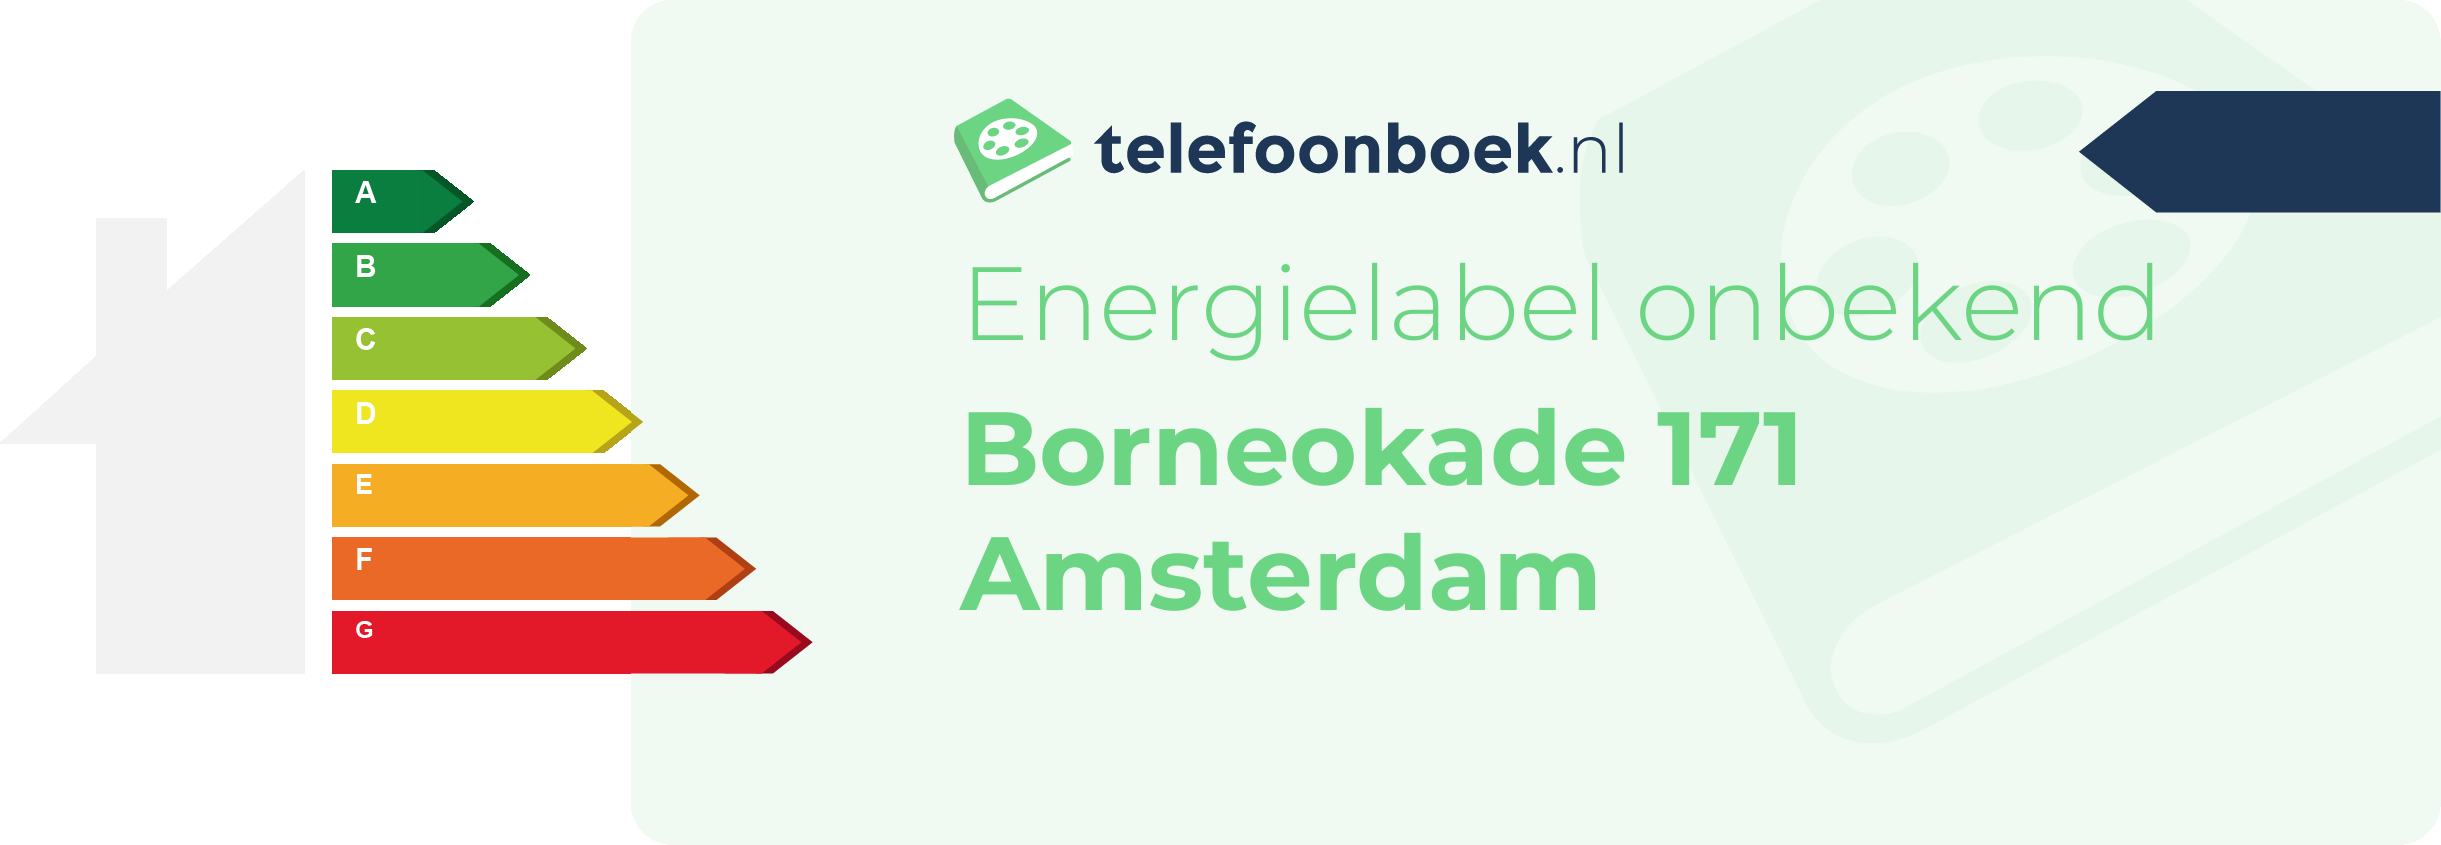 Energielabel Borneokade 171 Amsterdam